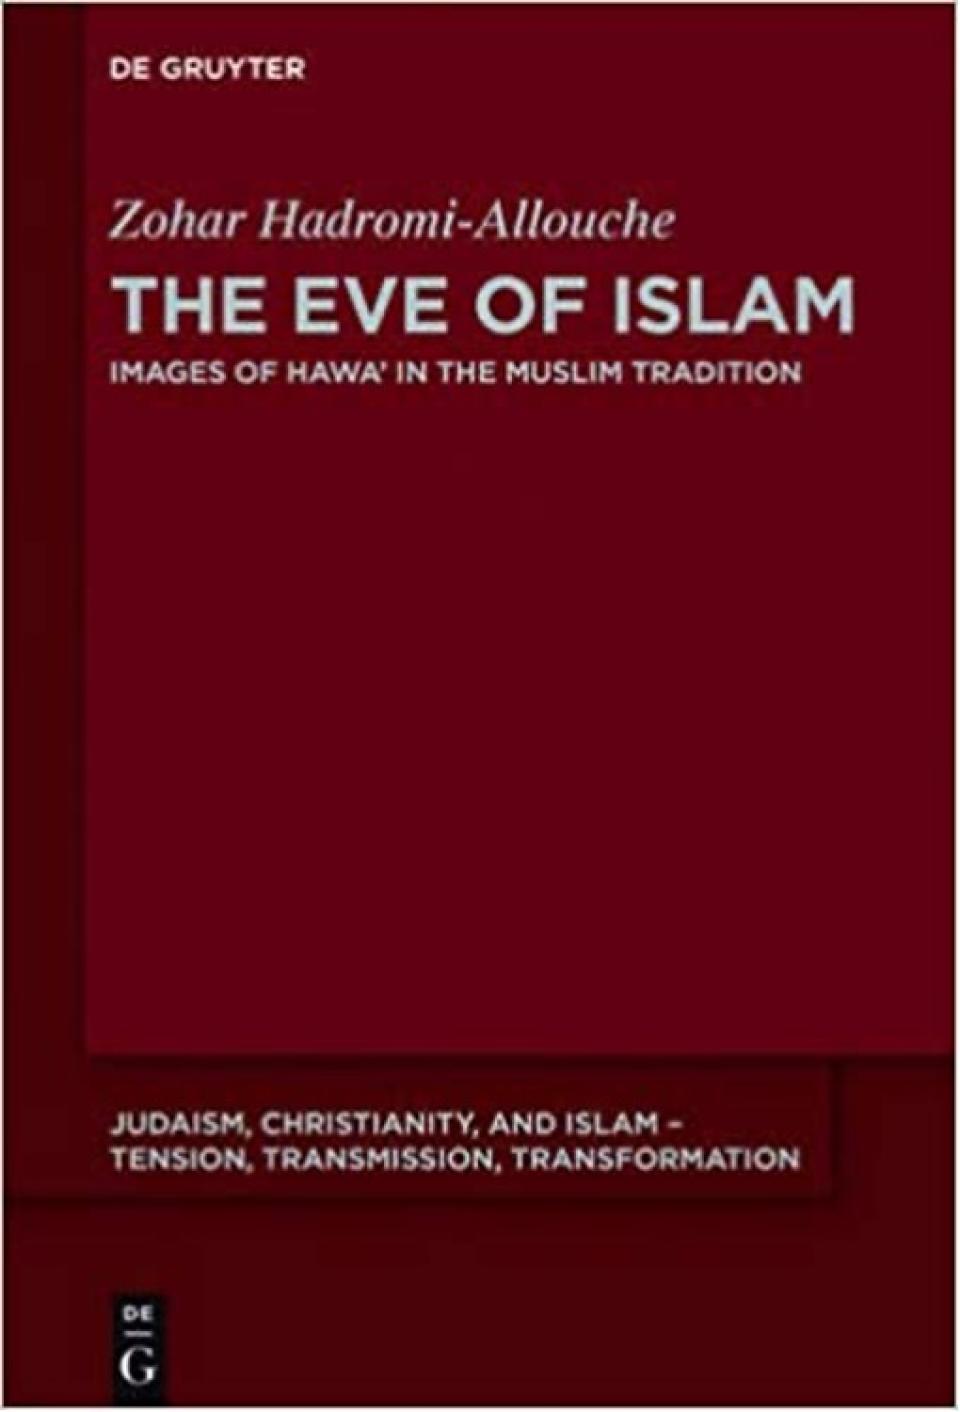 The Eve of Islam